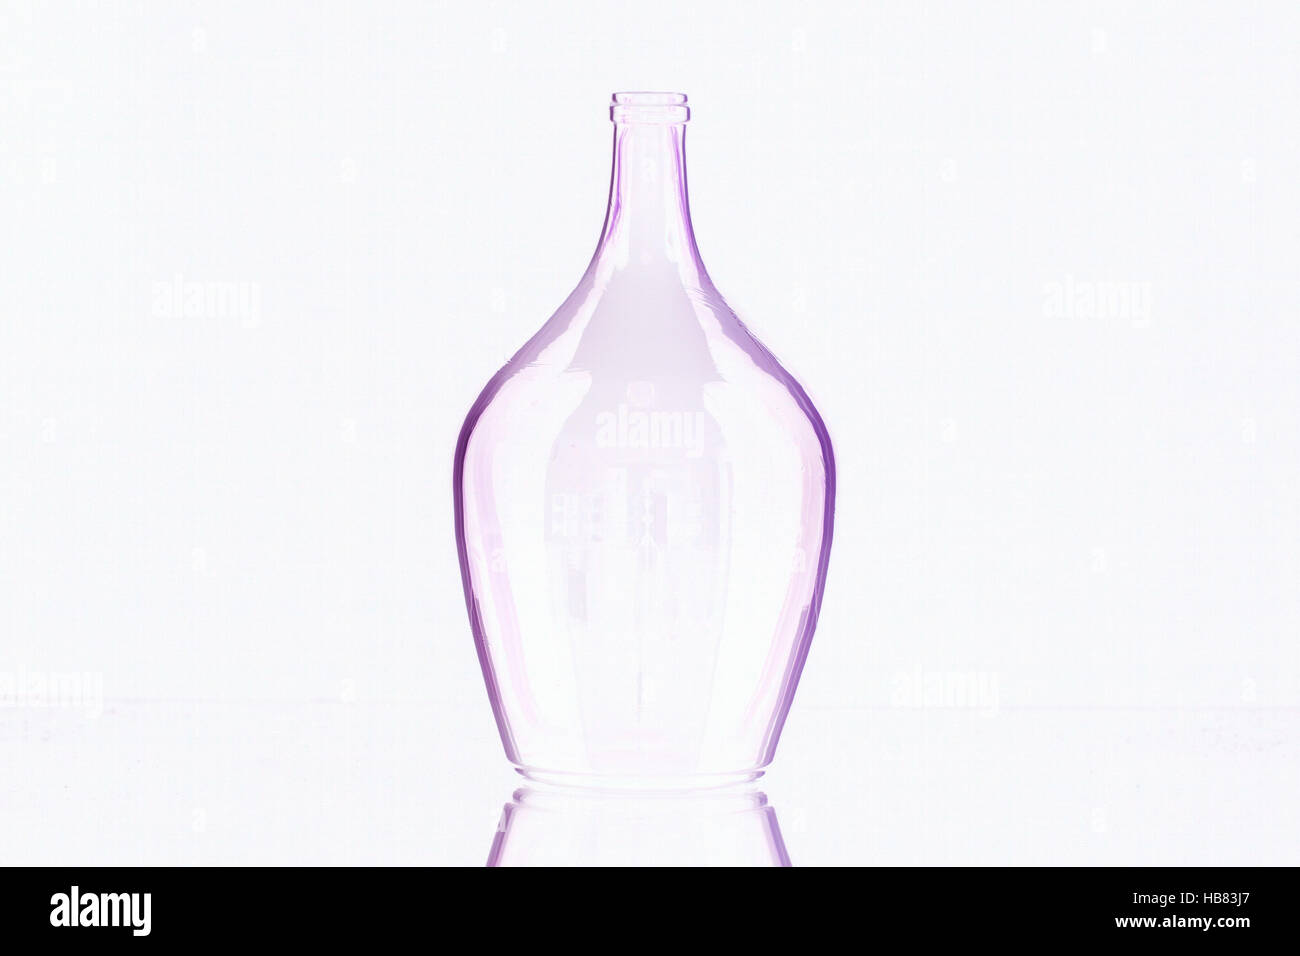 Silhouette of elegant old wine bottle on a glass desk Stock Photo